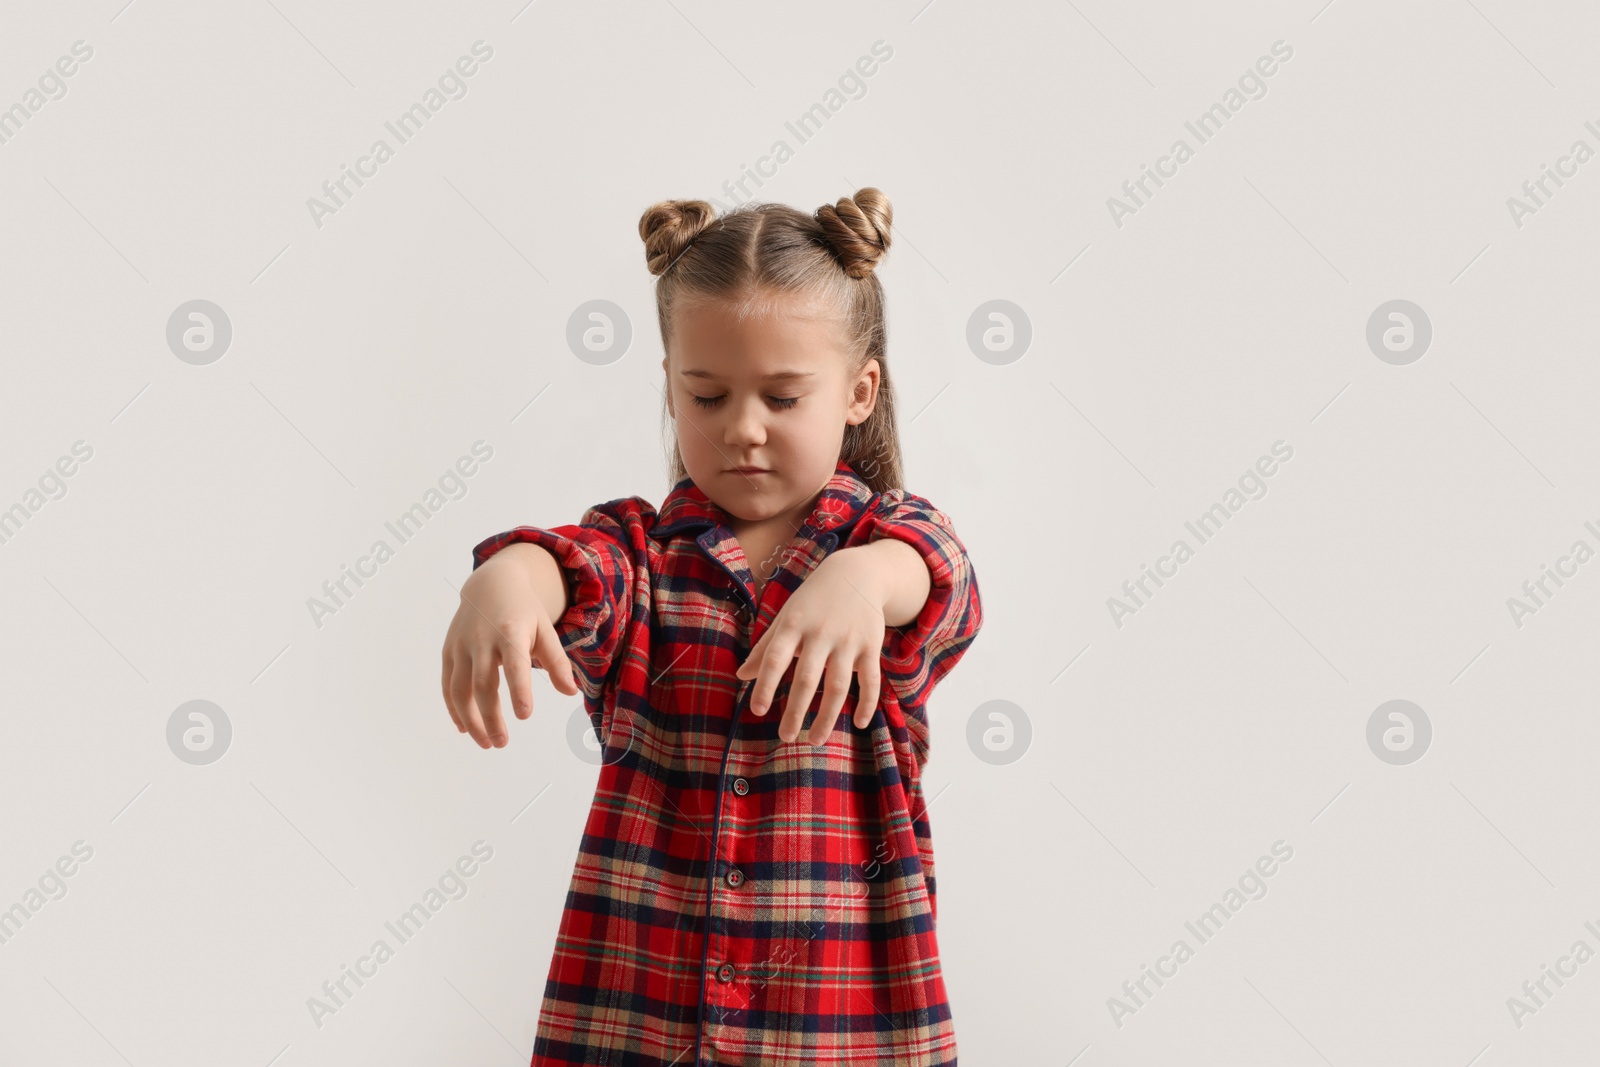 Photo of Girl in pajamas sleepwalking on white background